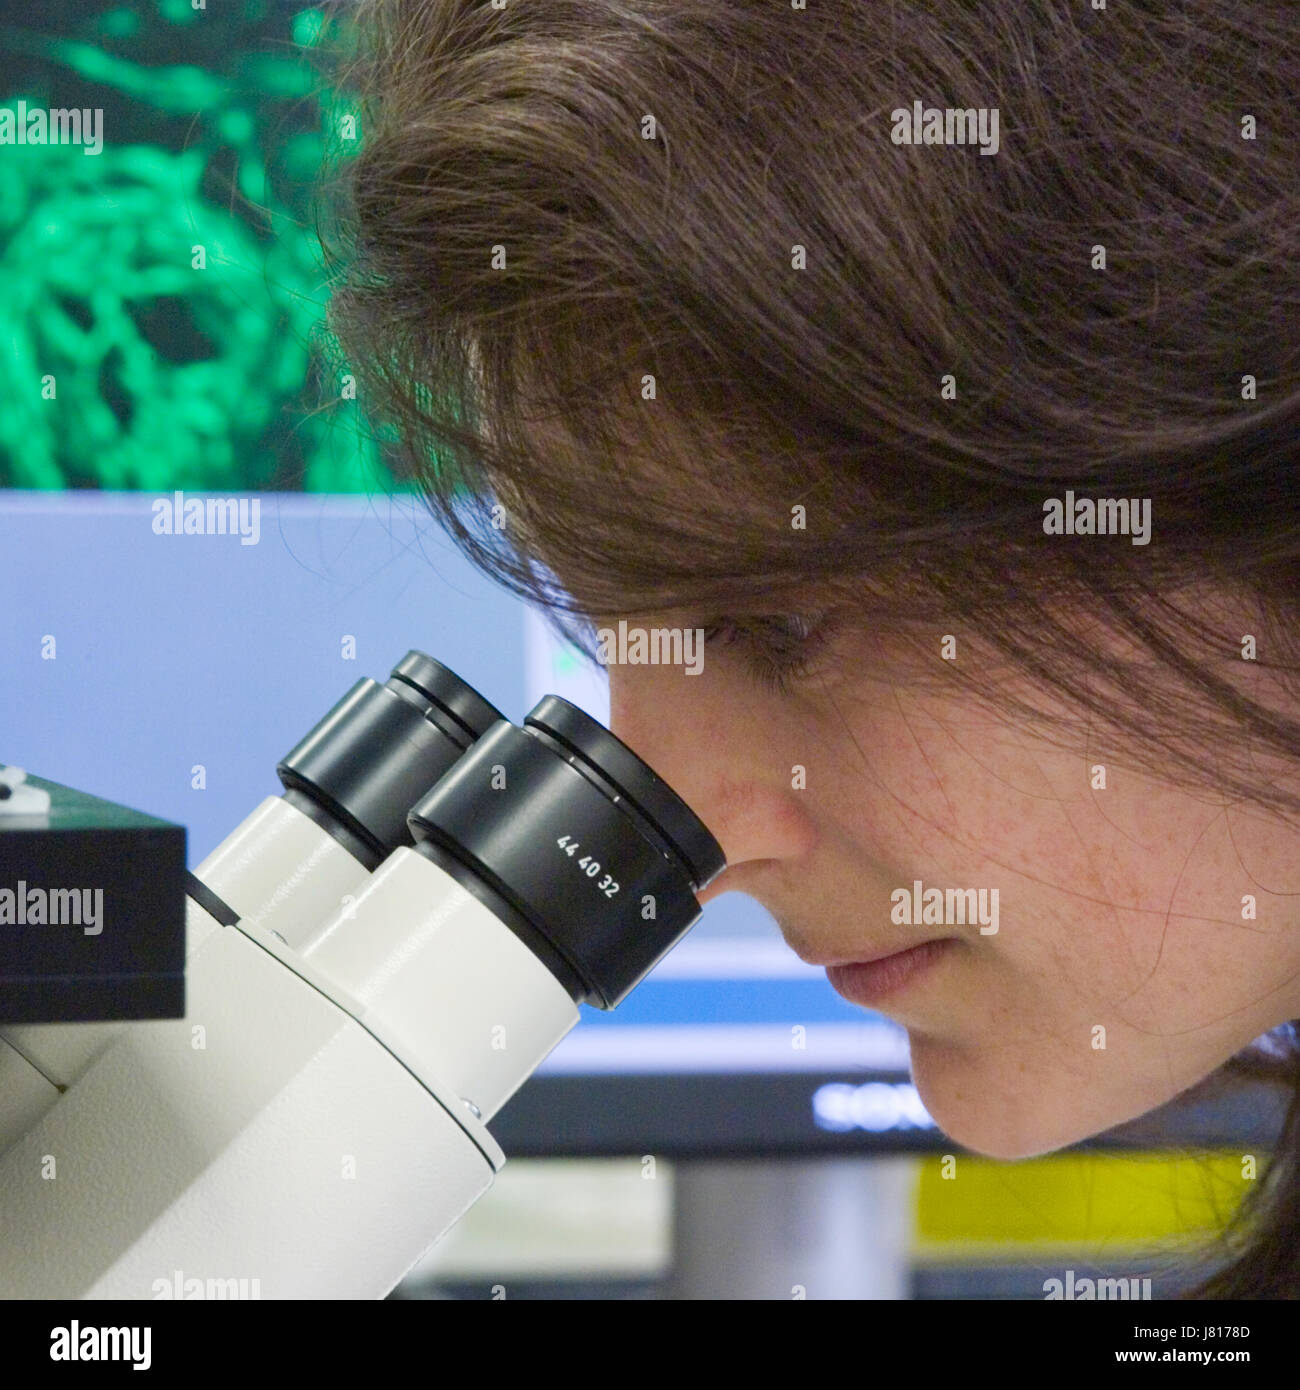 Woman scientist in bio-sciences lab looking through microscope eyepiece Stock Photo